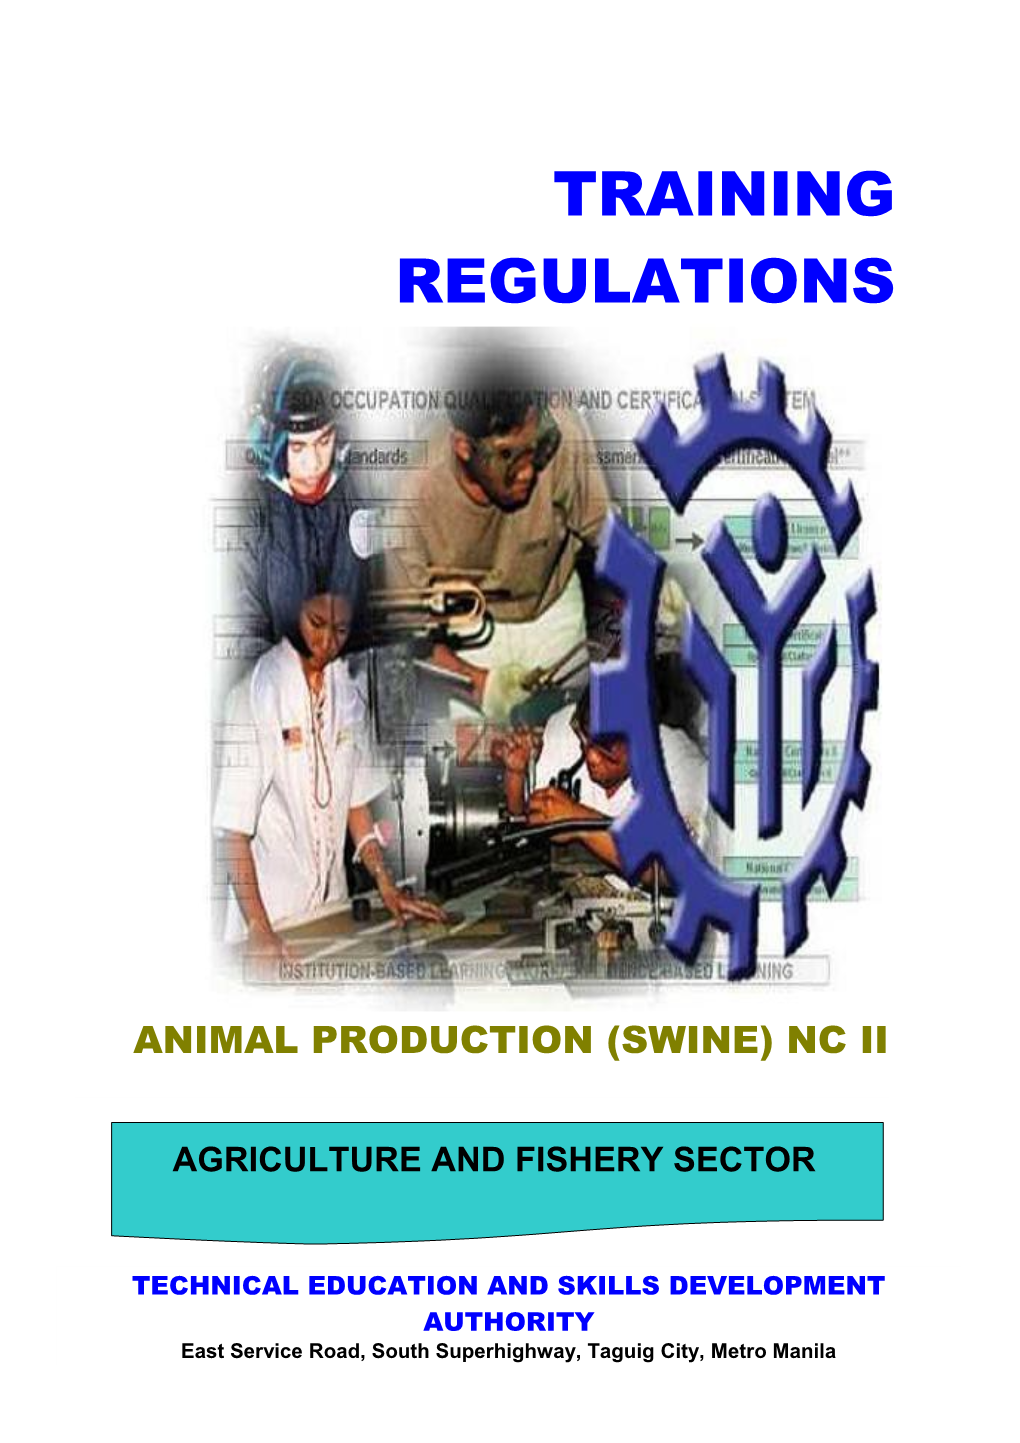 TR-ANIMAL PRODUCTION (SWINE) NC II PROMULGATED December 2013